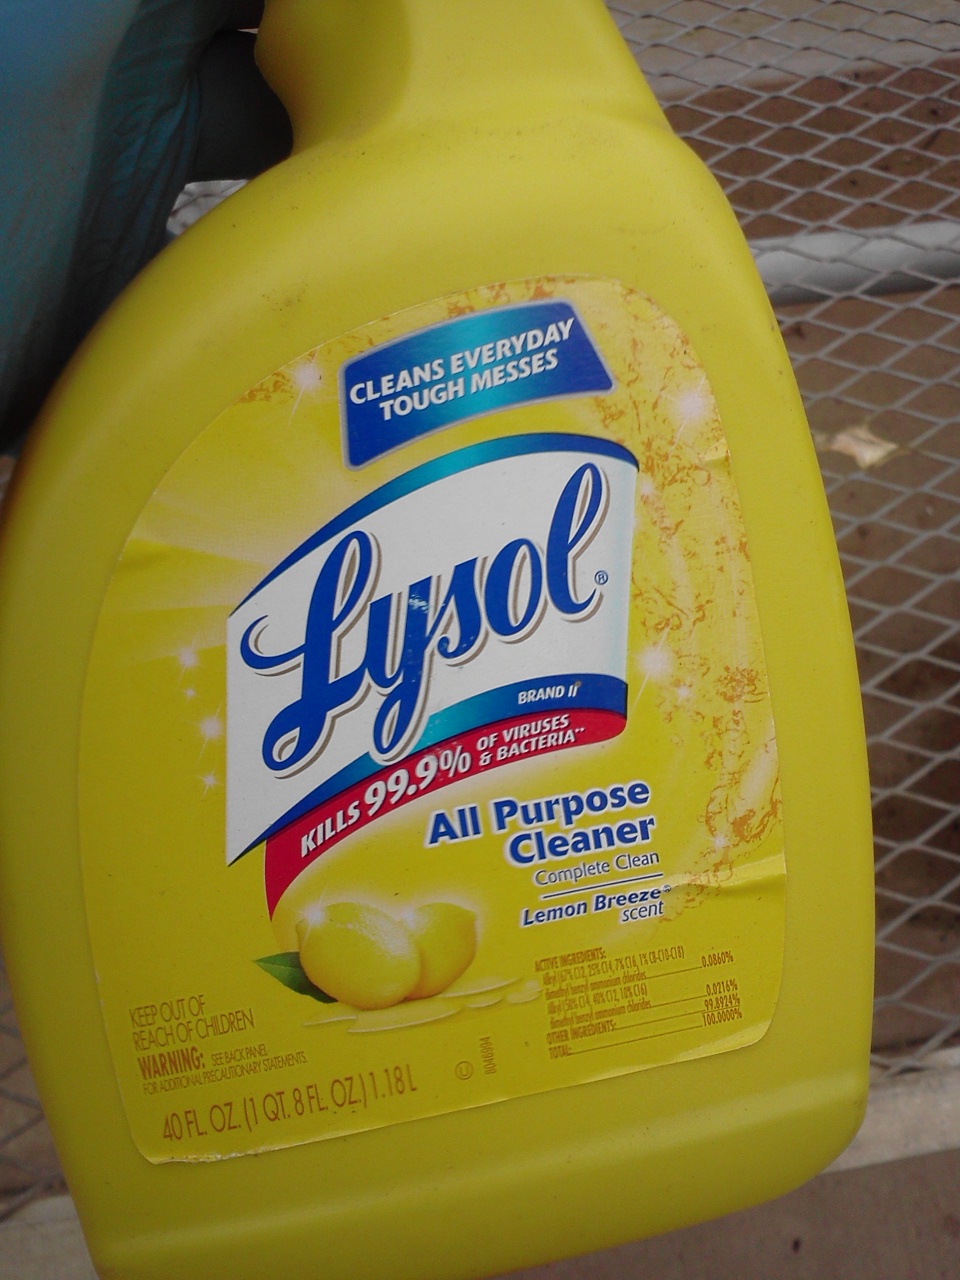 How does Lysol kill bacteria?